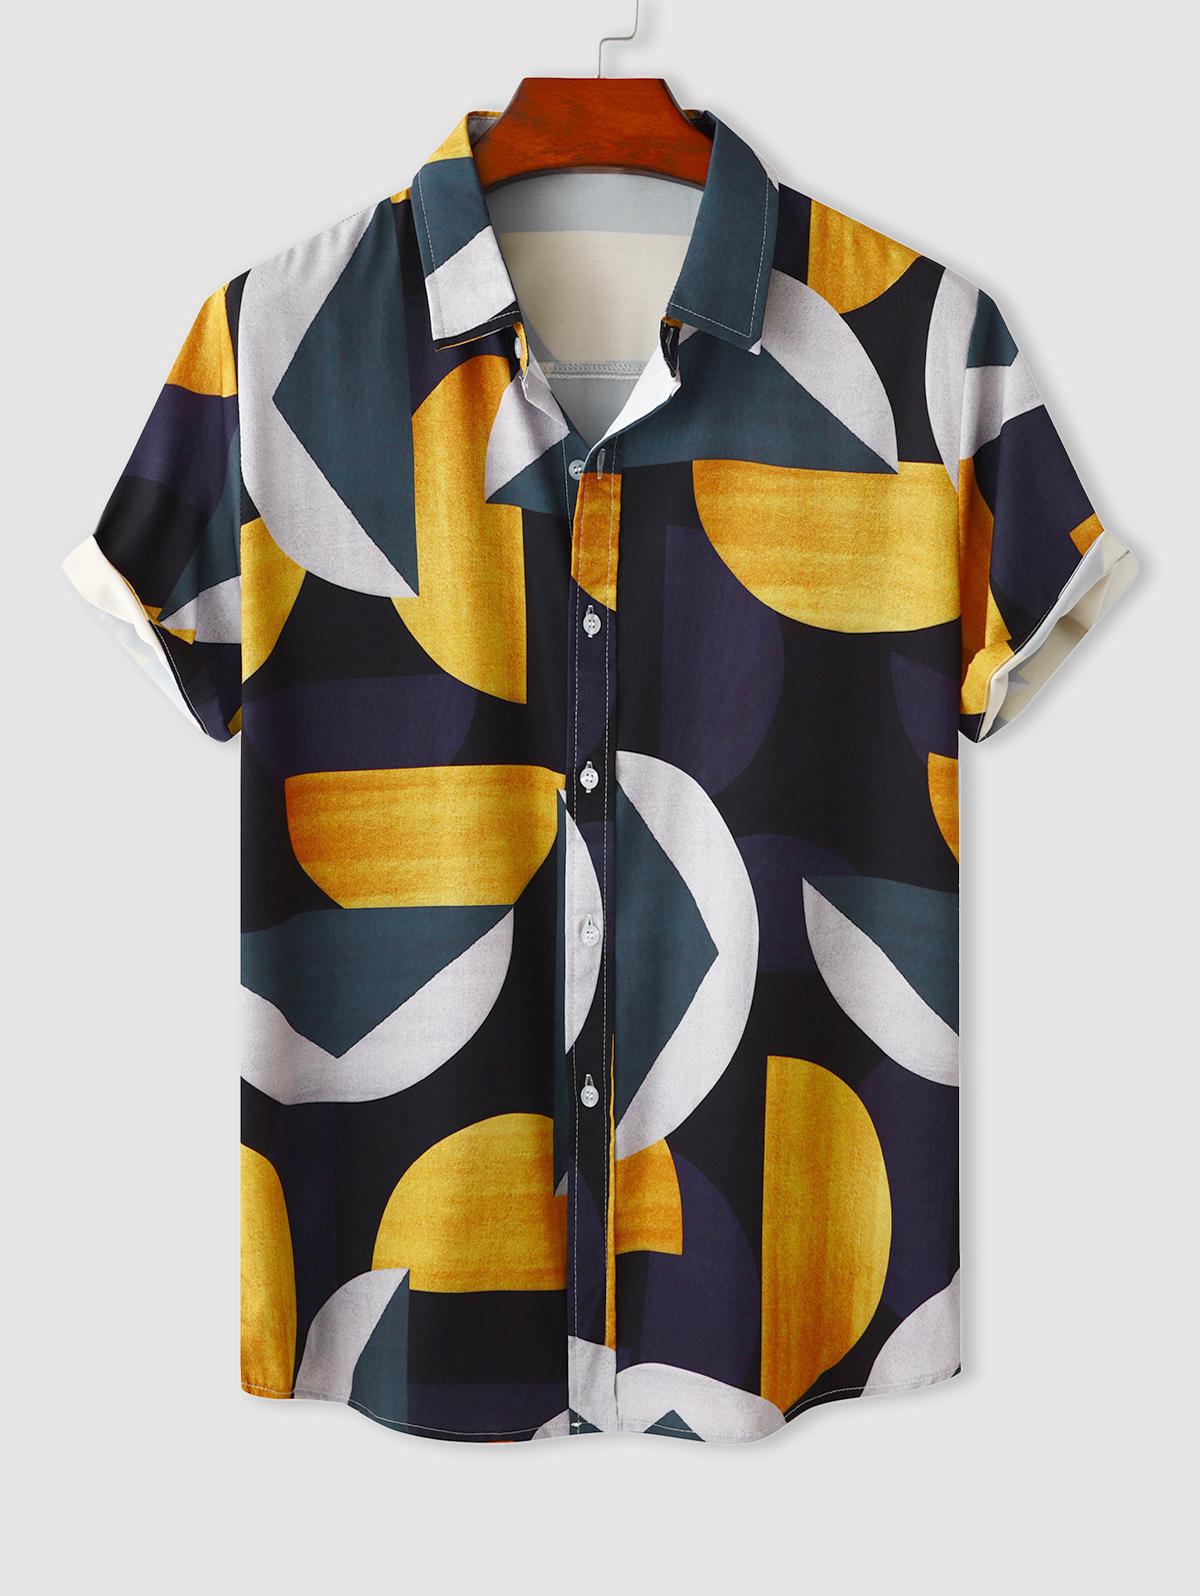 ZAFUL Men's Short Sleeves Geometric Pattern Colorblock Vacation Shirt M Deep blue